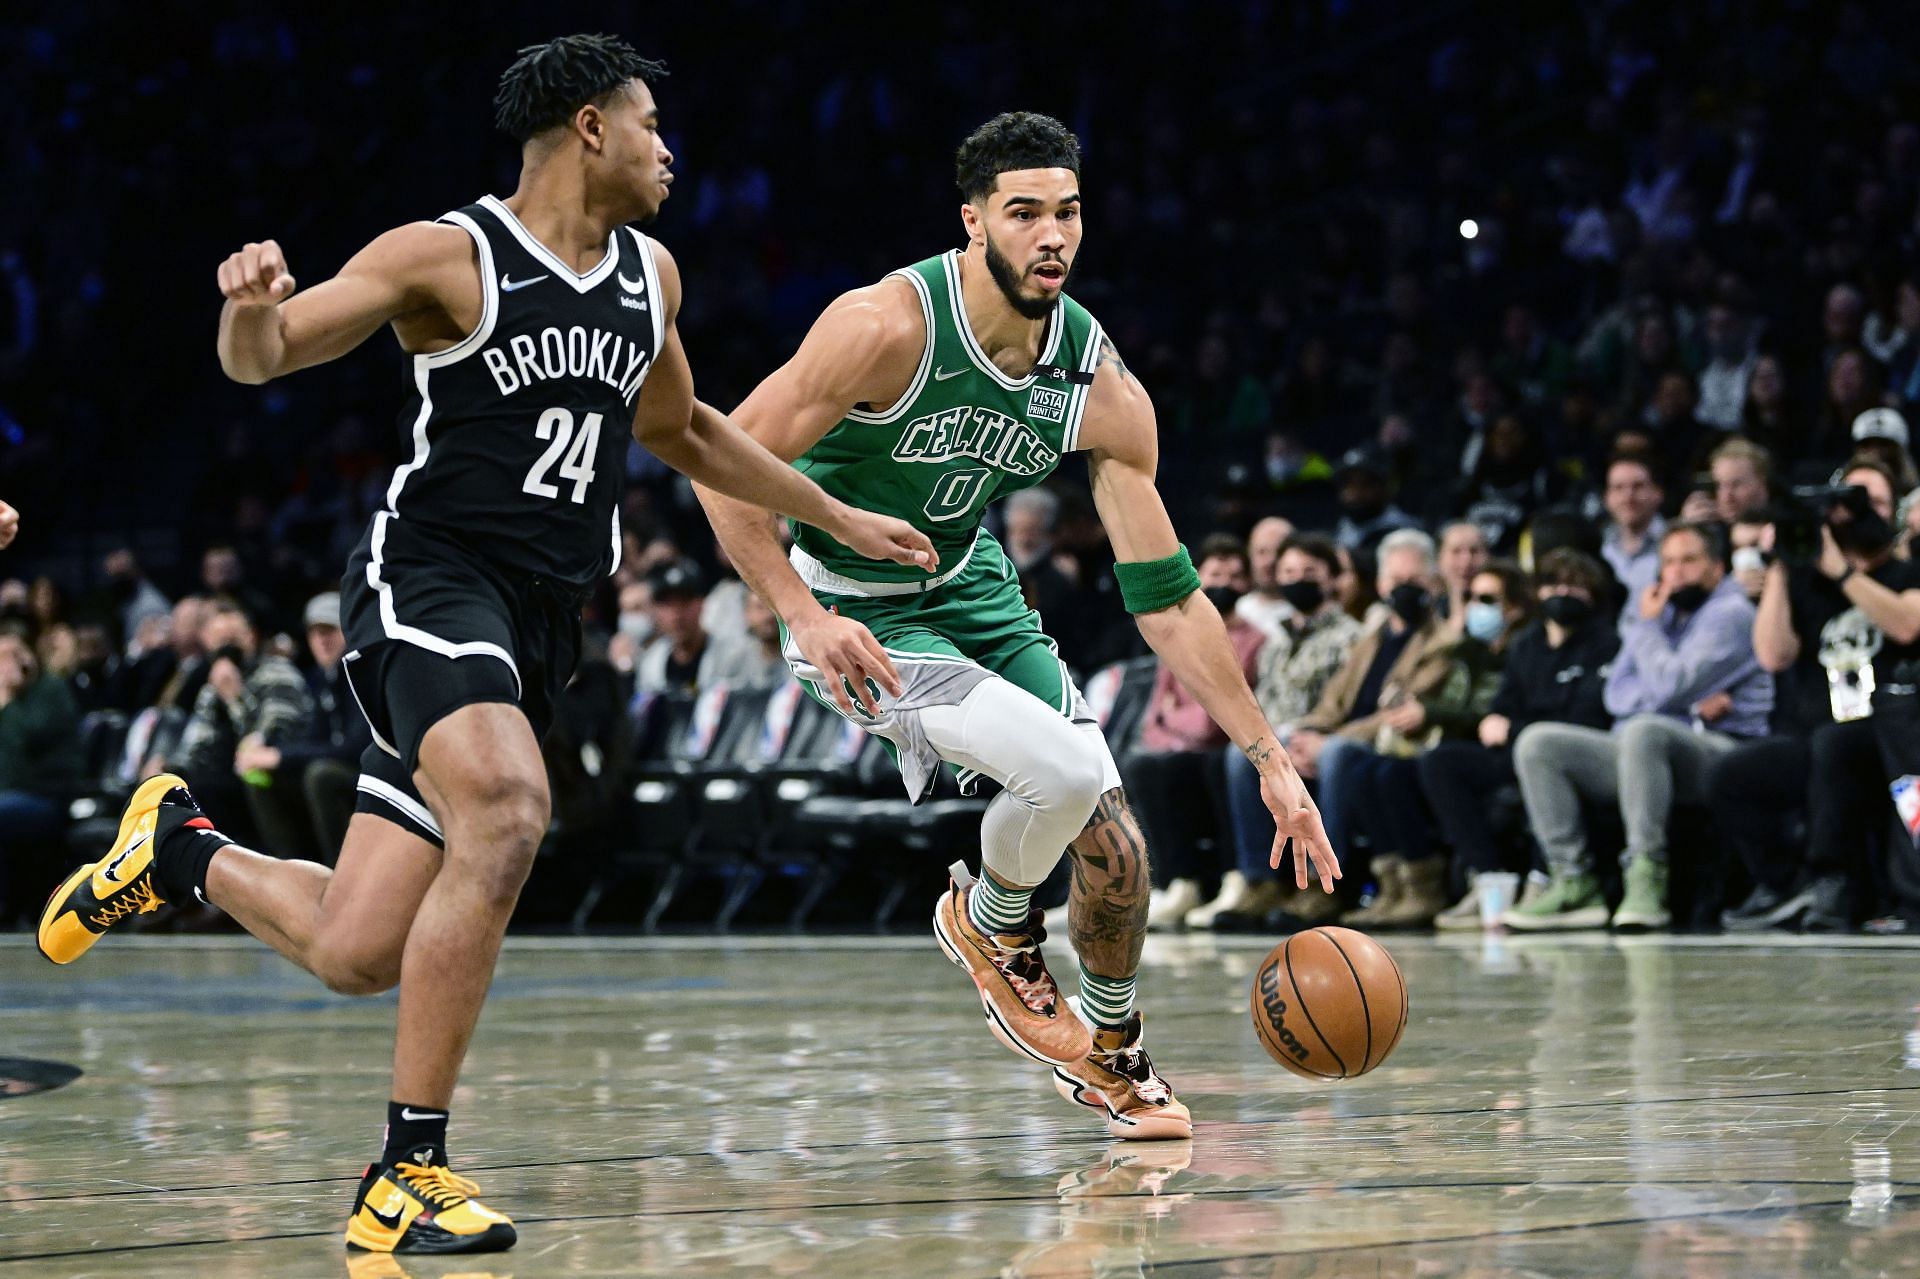 The Brooklyn Nets will host the Boston Celtics on February 24th